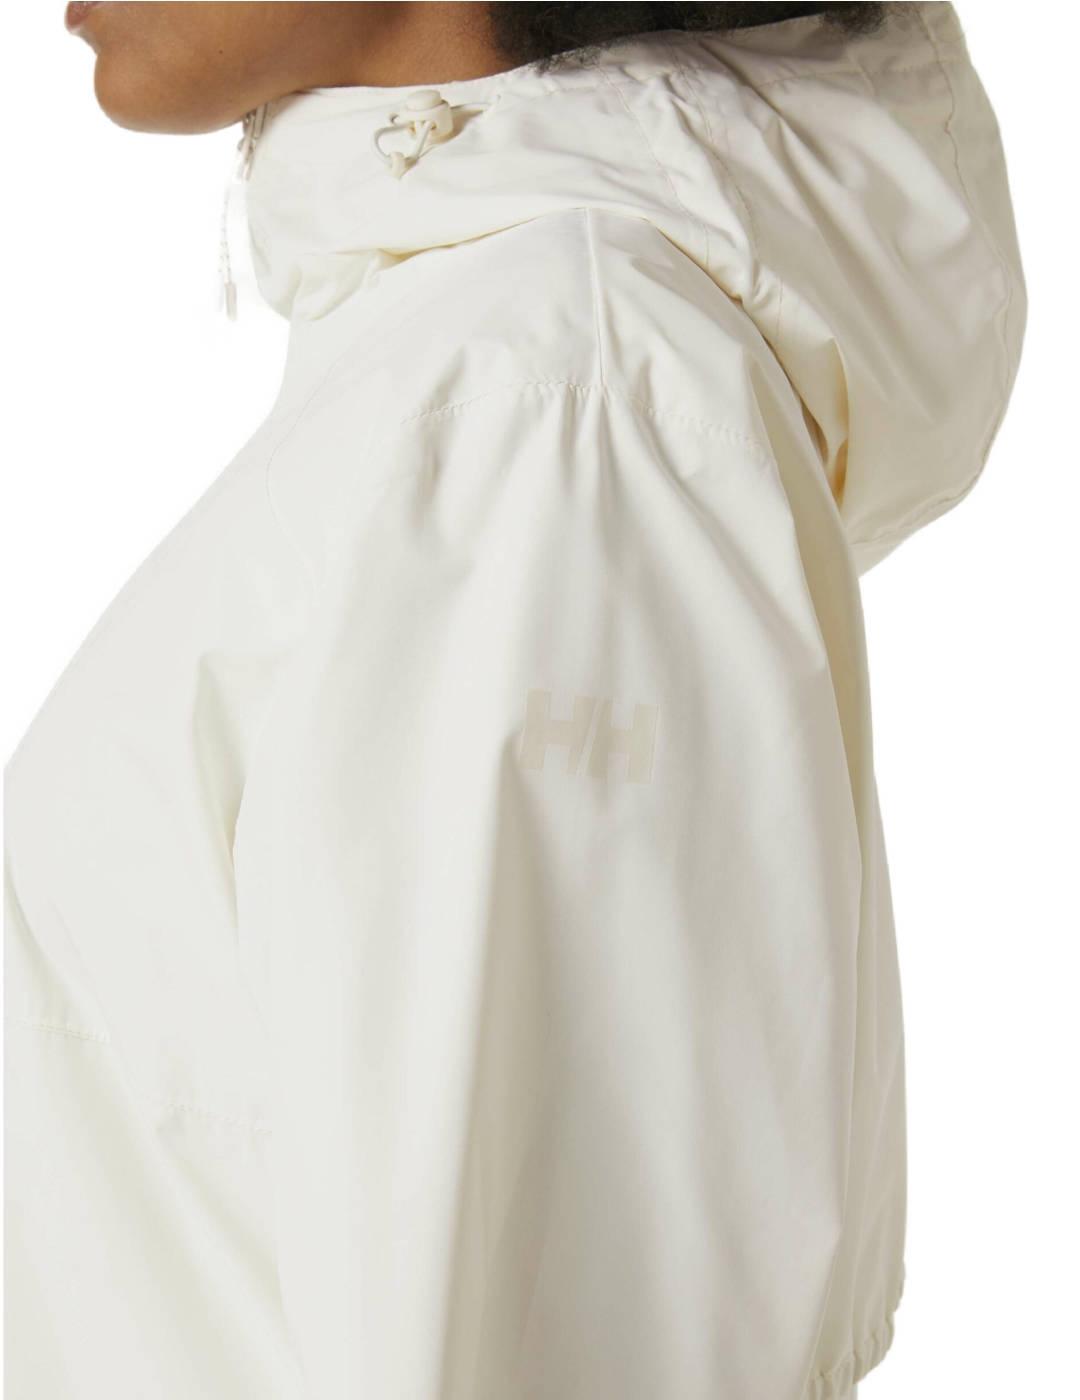 Chubasquero Helly Hansen Essence blanco con capucha de mujer